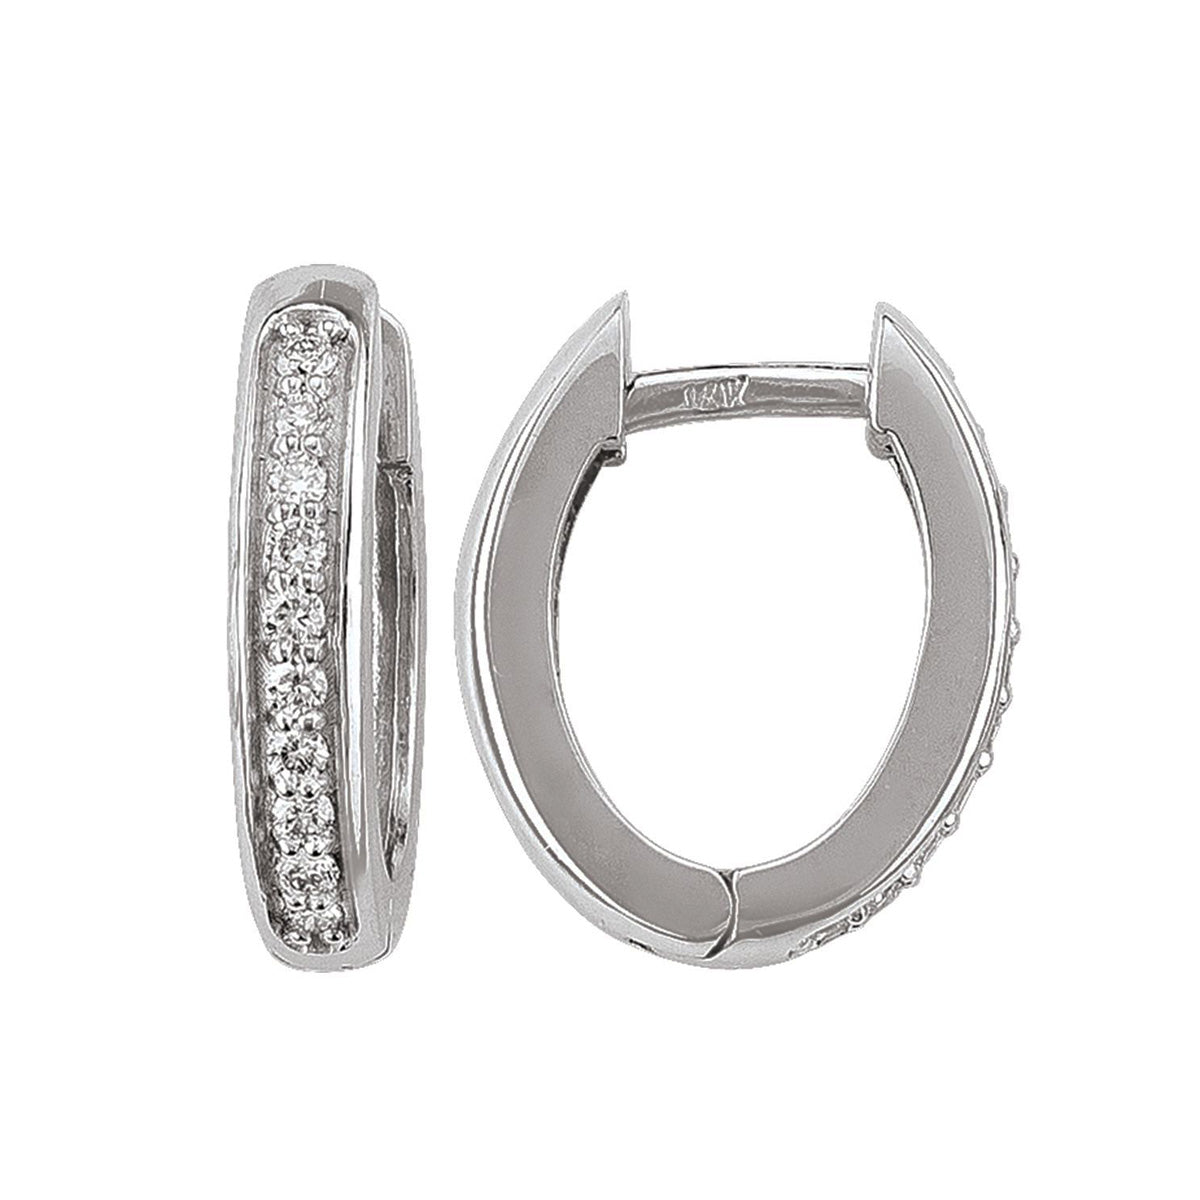 DCH0103, Gold Diamond Earrings, Huggies